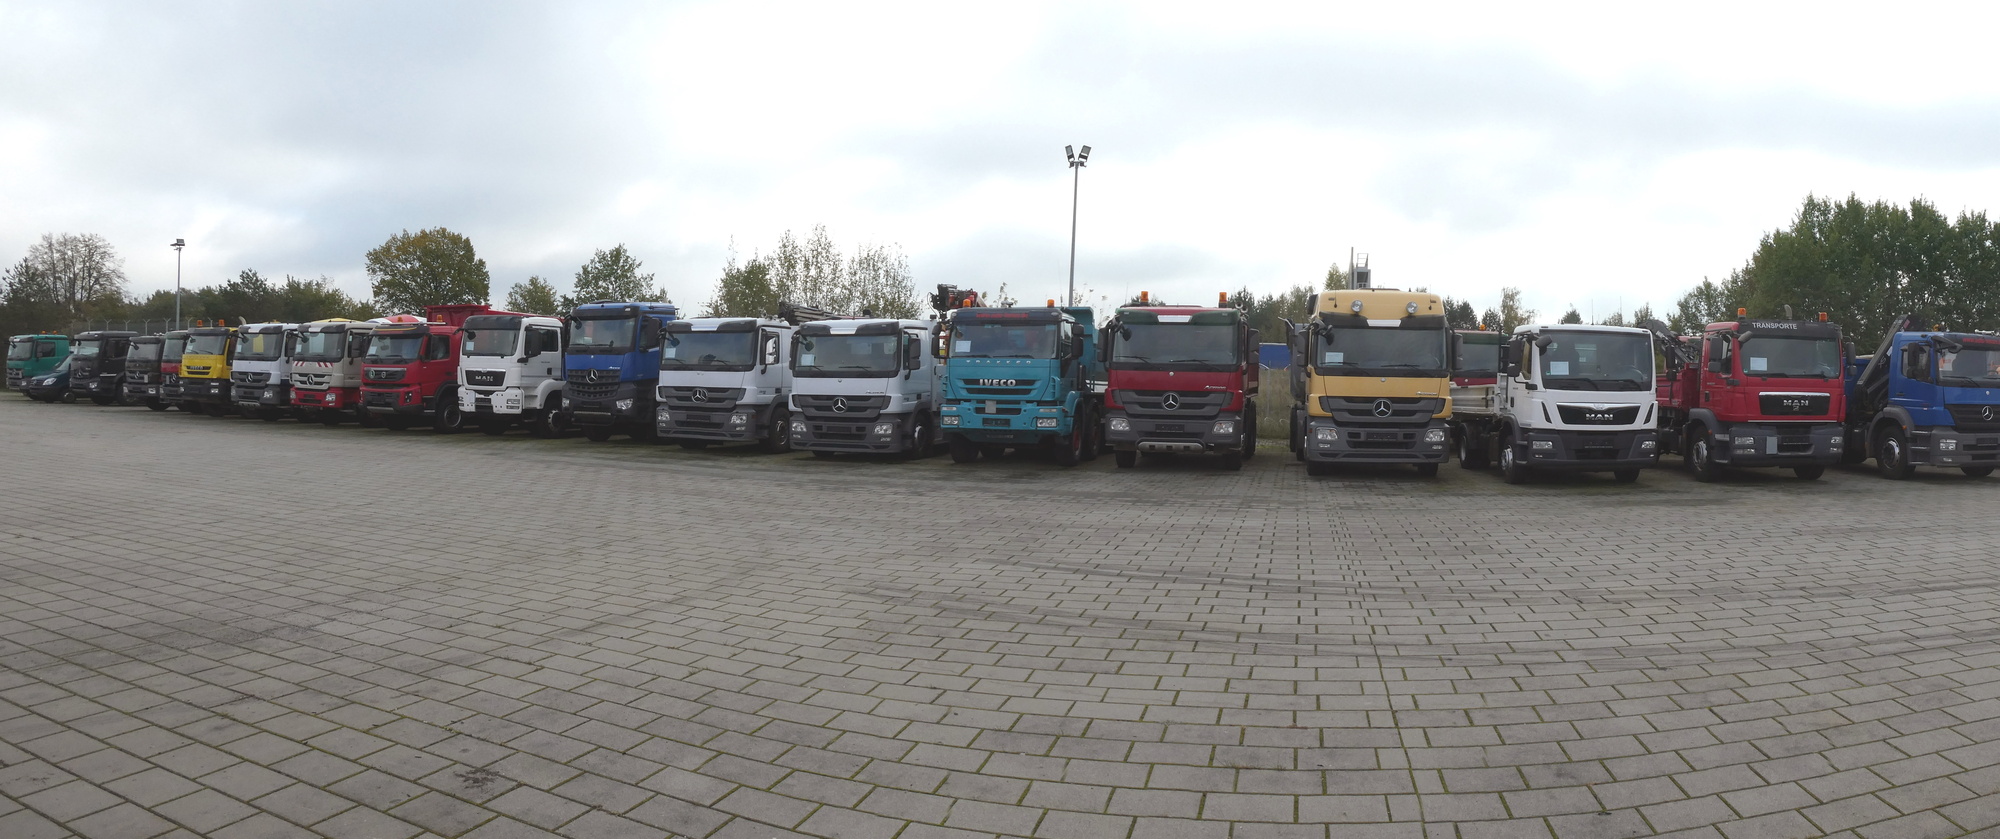 Henze Truck GmbH - Фургоны undefined: фото 1